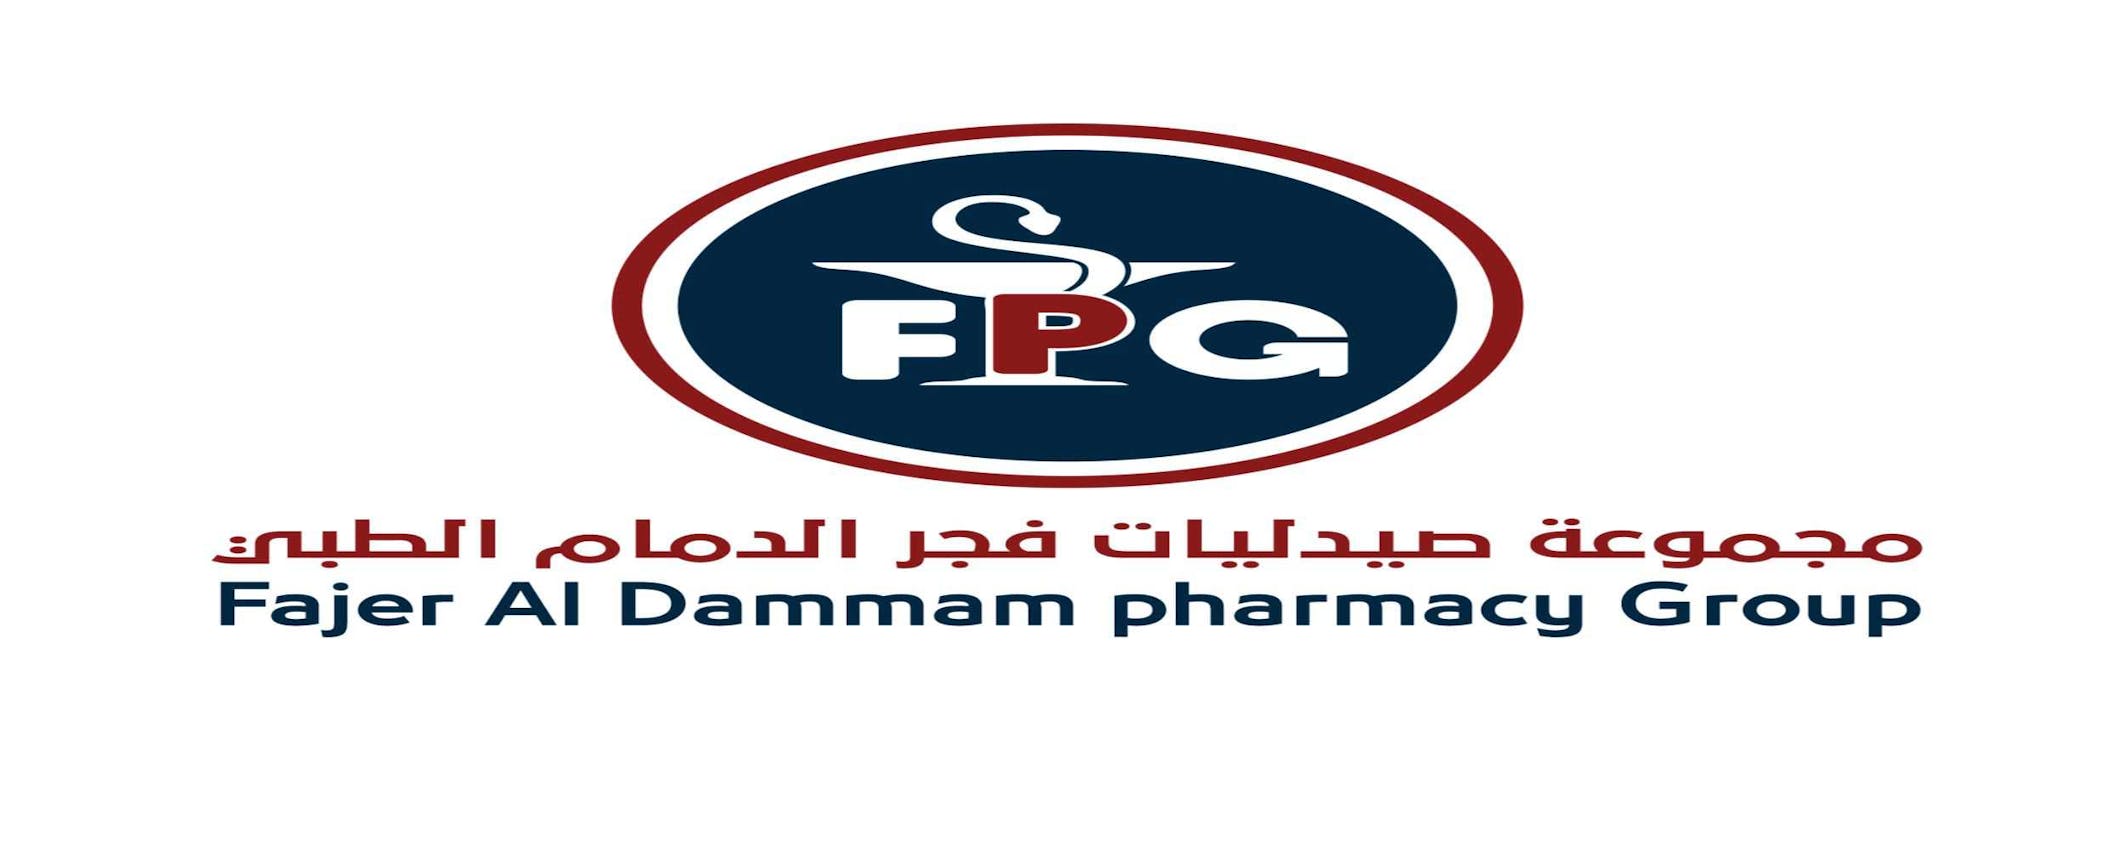 Fajer Al Dammam Pharmacy Group